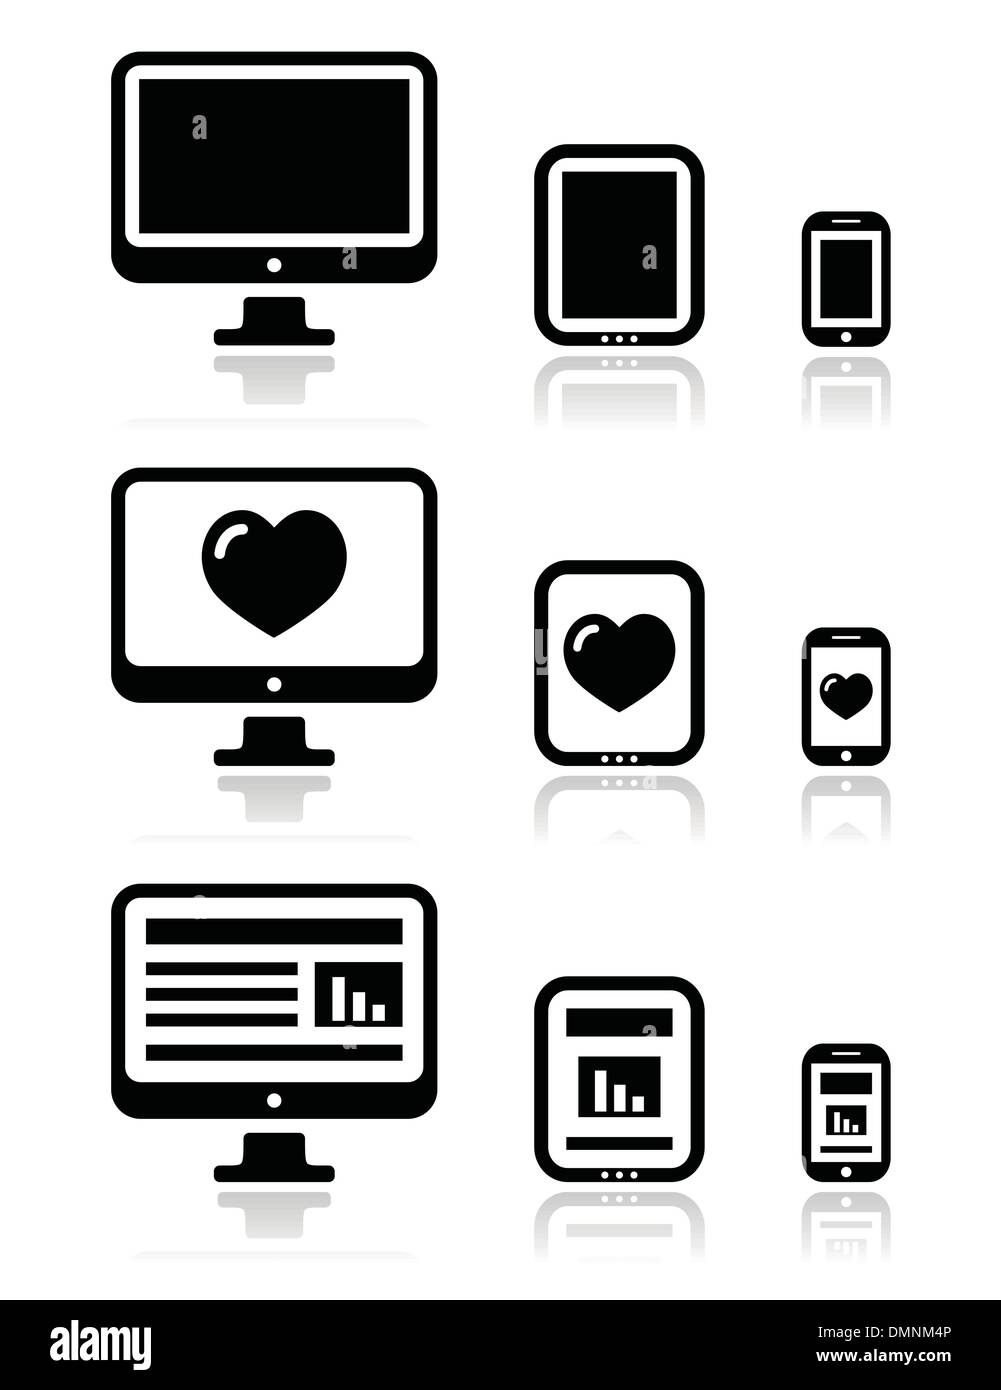 Responsive website design - computer screen, mobile, tablet icons set Stock Vector